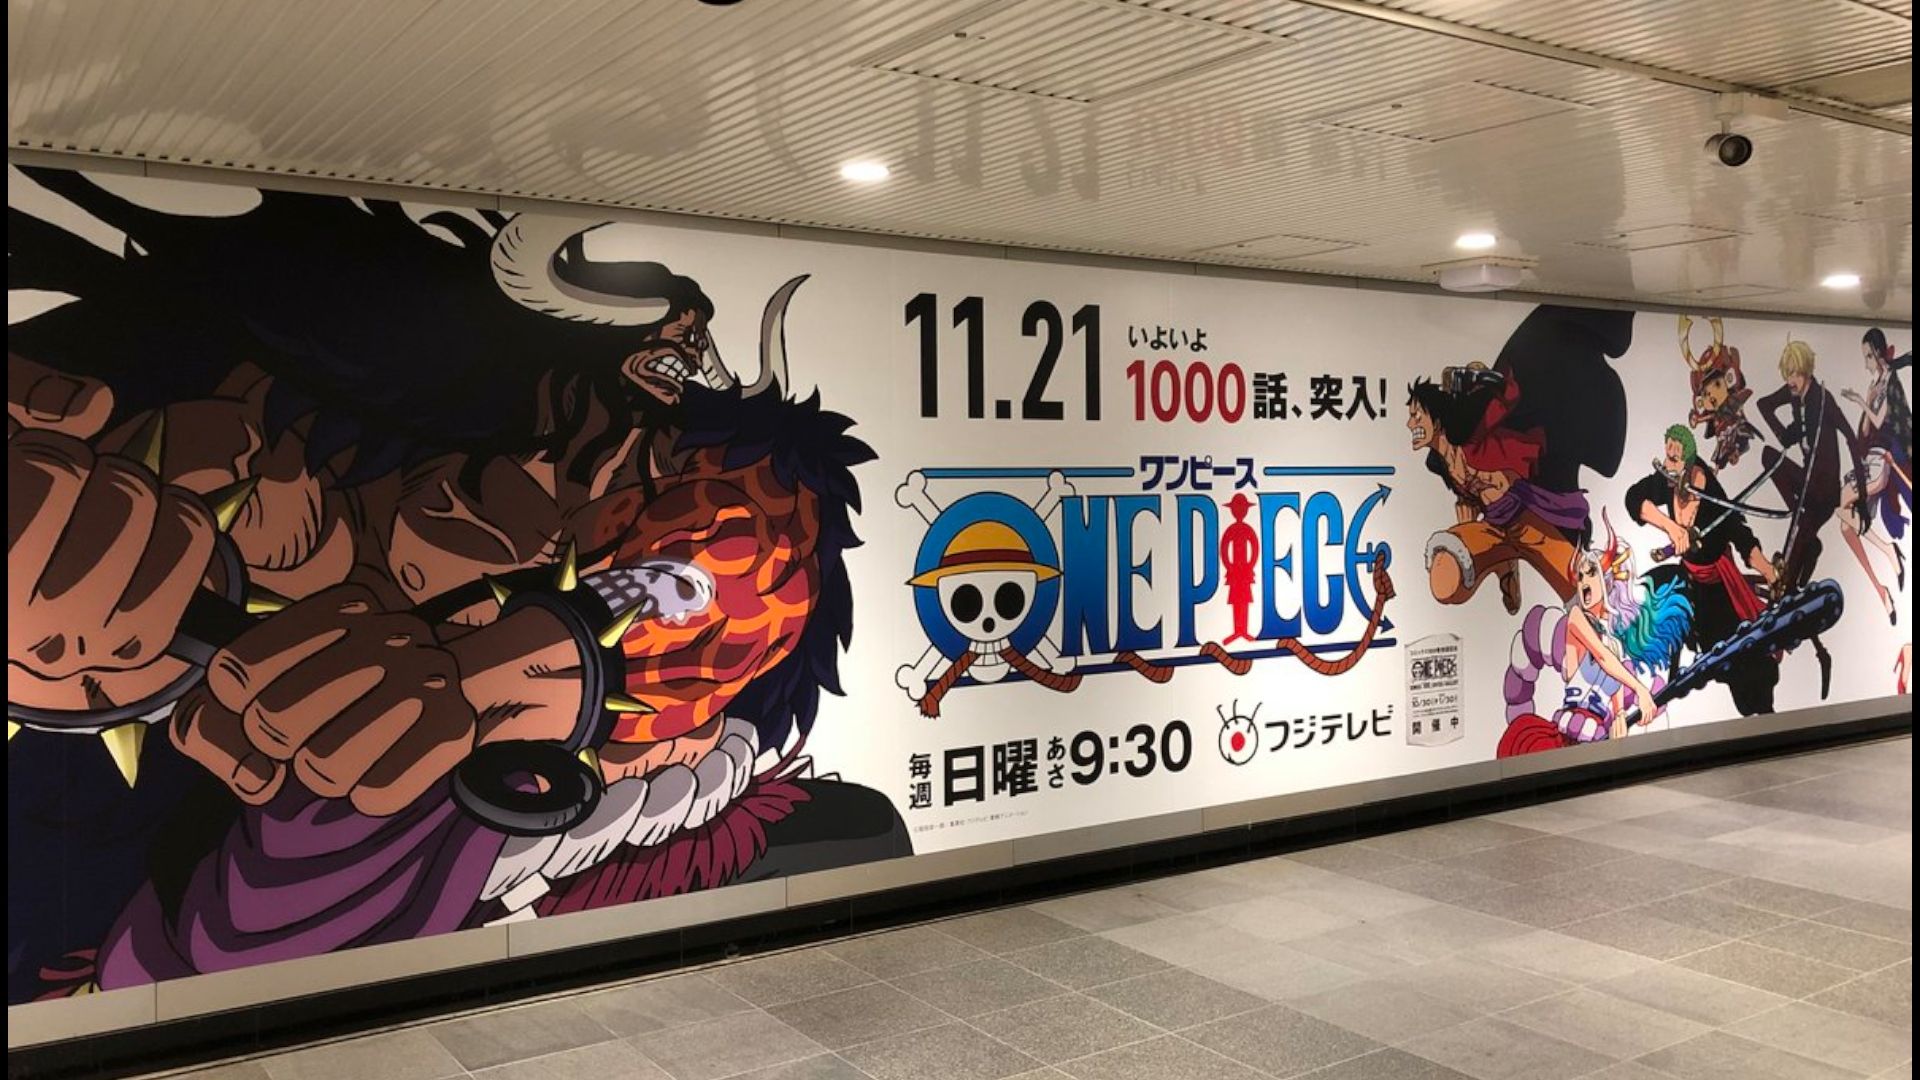 Stasiun Shibuya dalam rangka menyambut eps 1000 dari Anime ONE PIECE!!